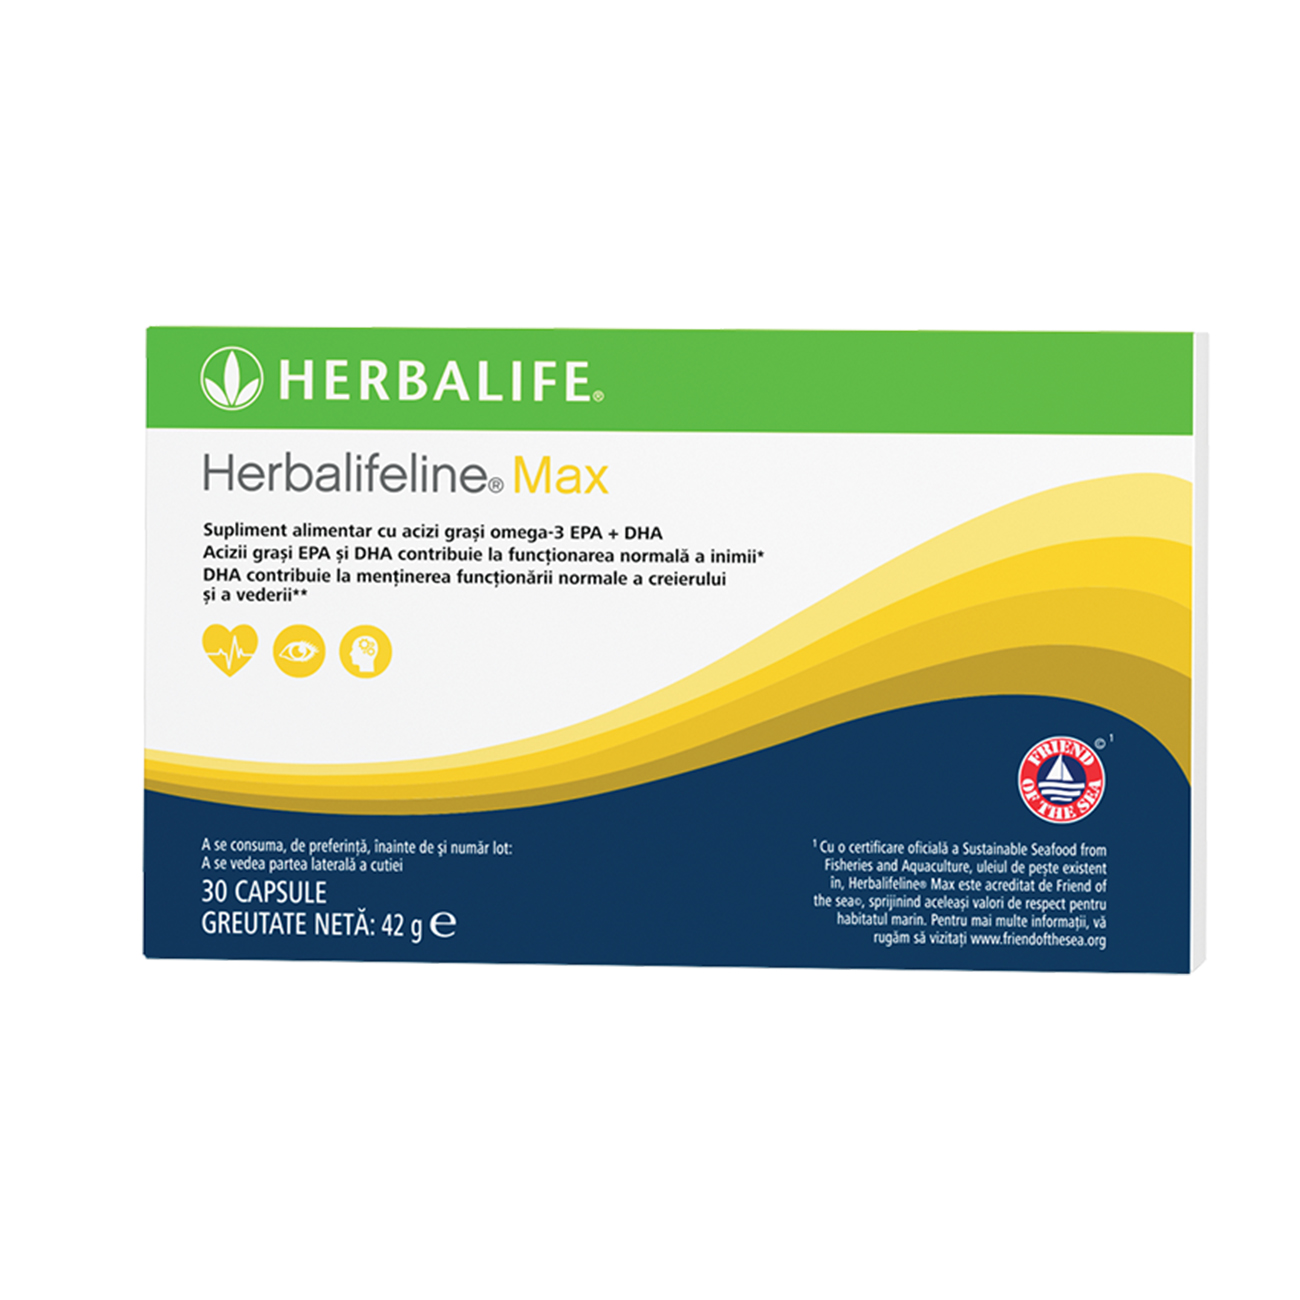 Herbalifeline® Max Omega-3 product shot